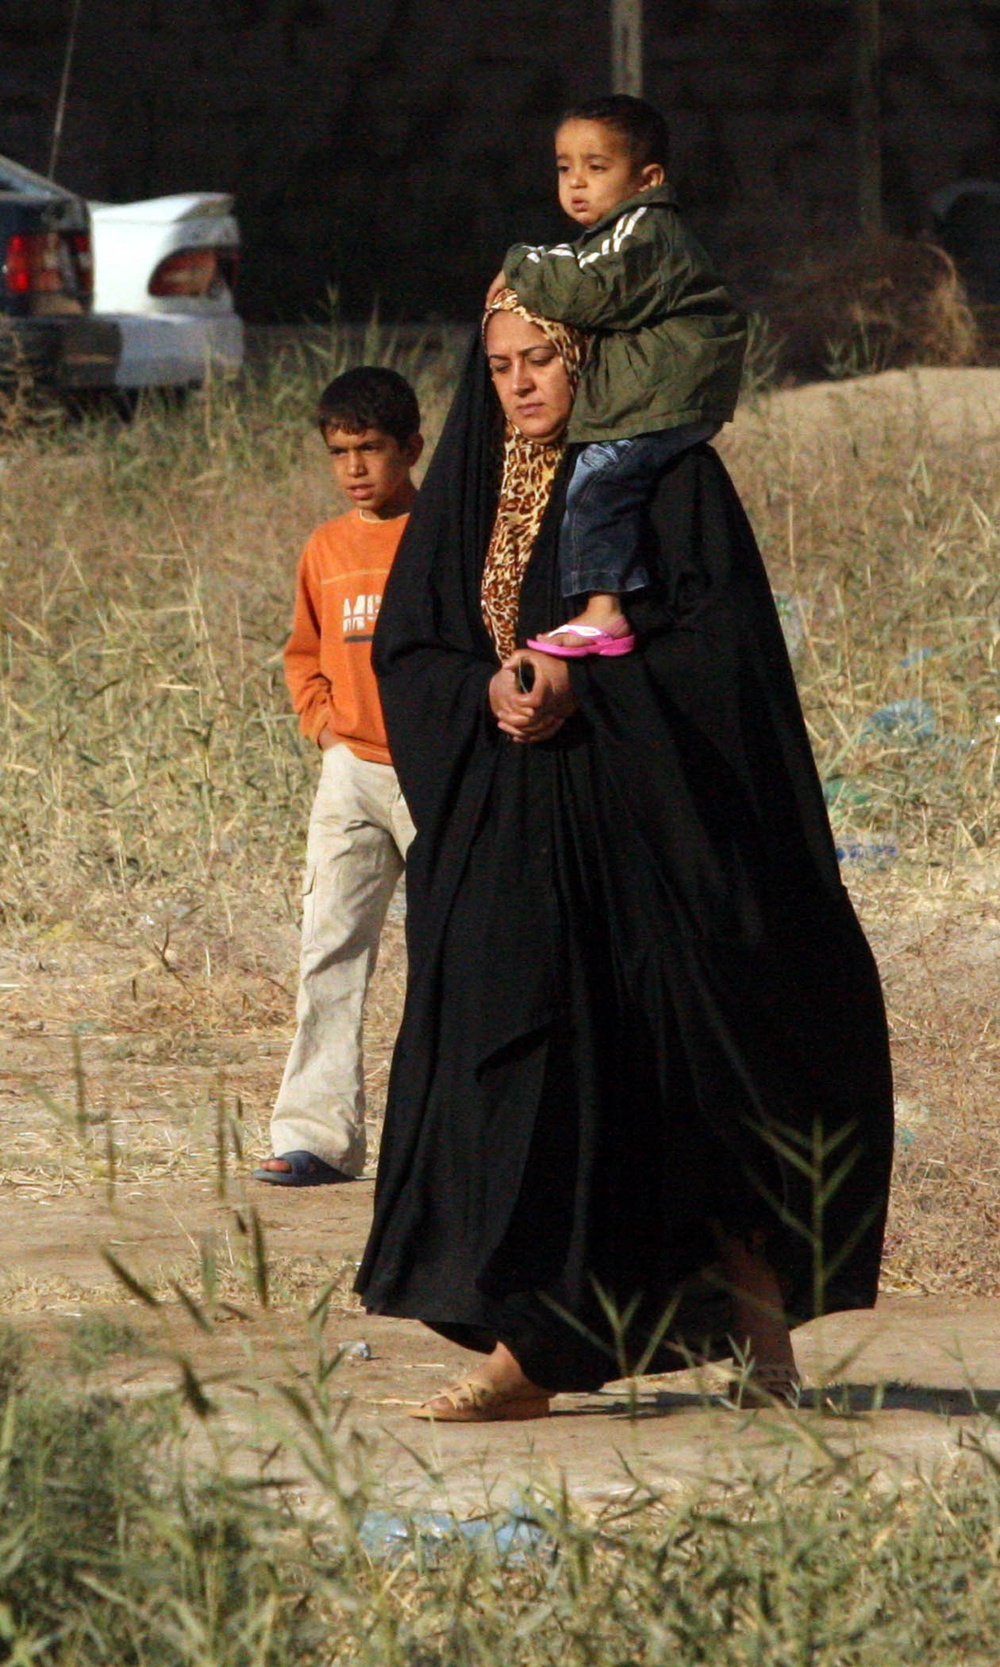 Rakkasans help put Iraqi face on locals&amp;amp;#65533; medica